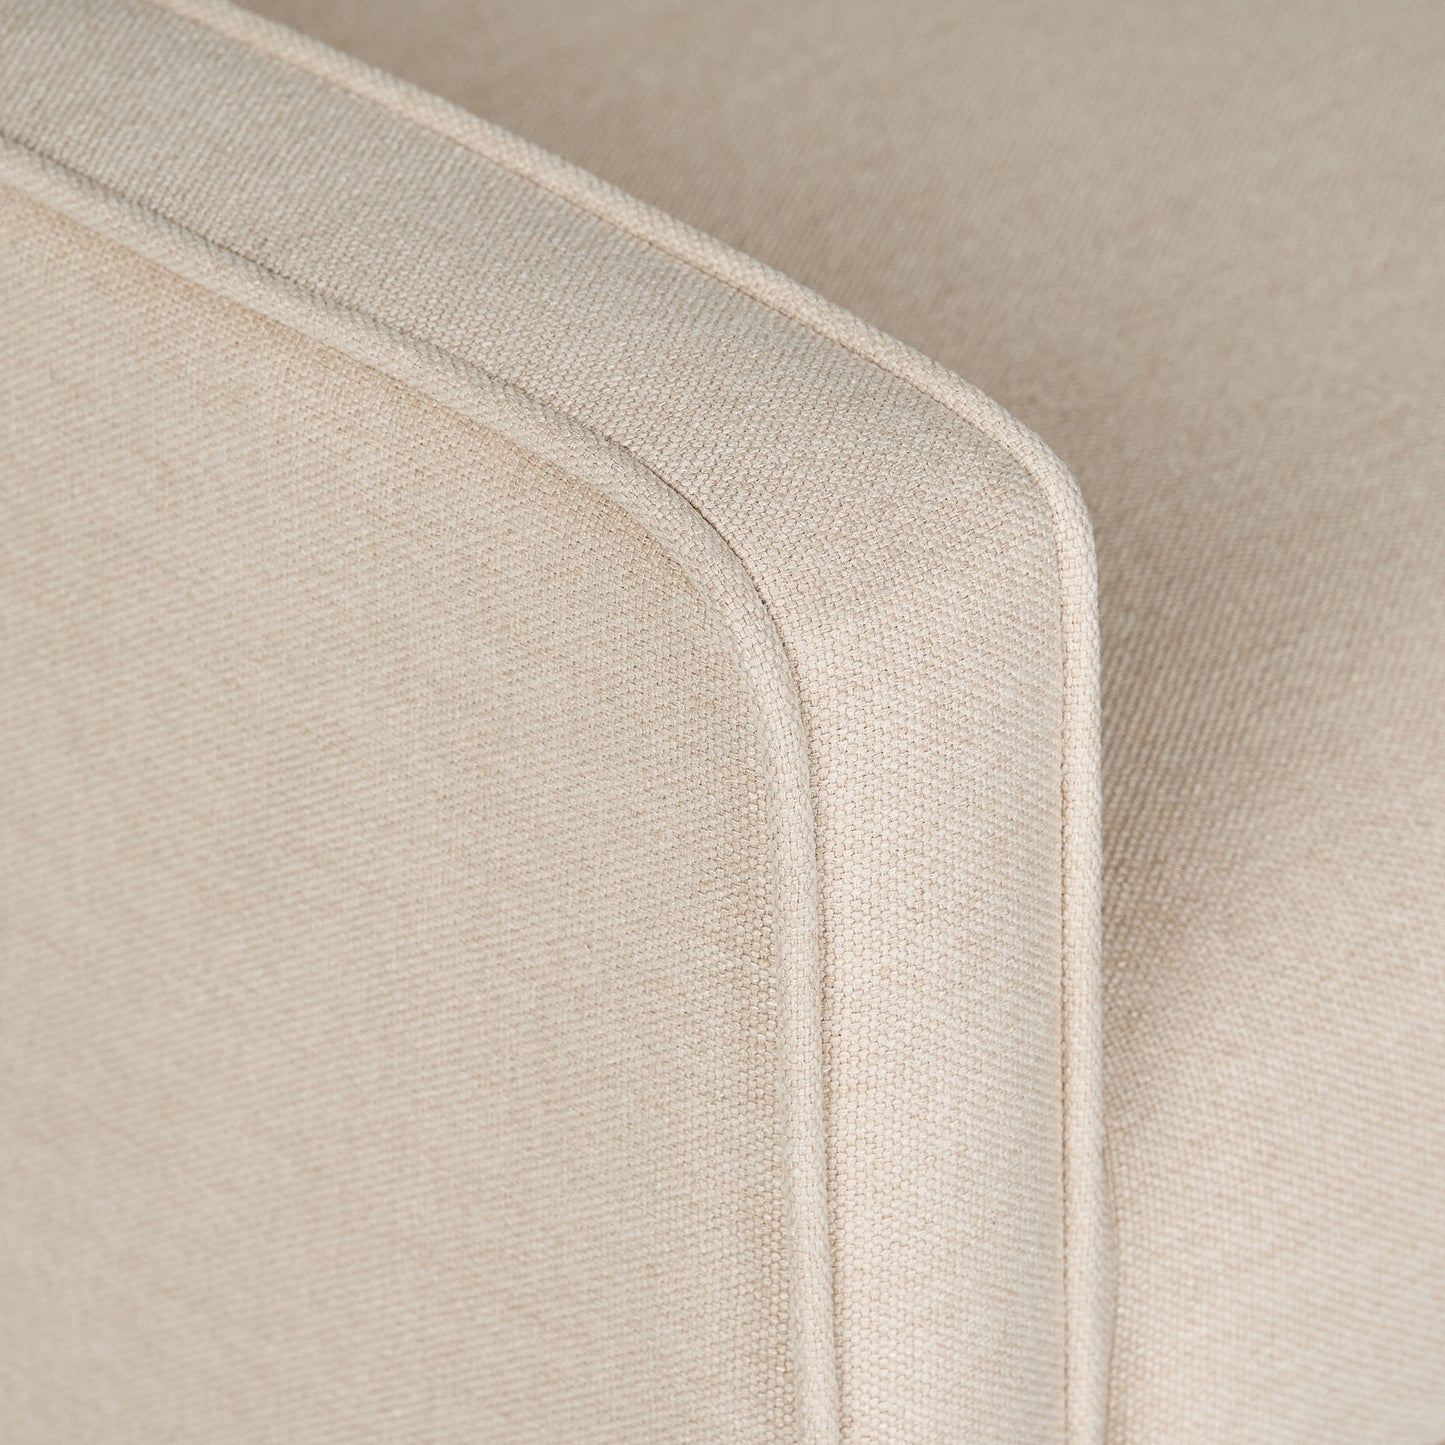 Olinda Minimalist Style Fabric Recliner Chair